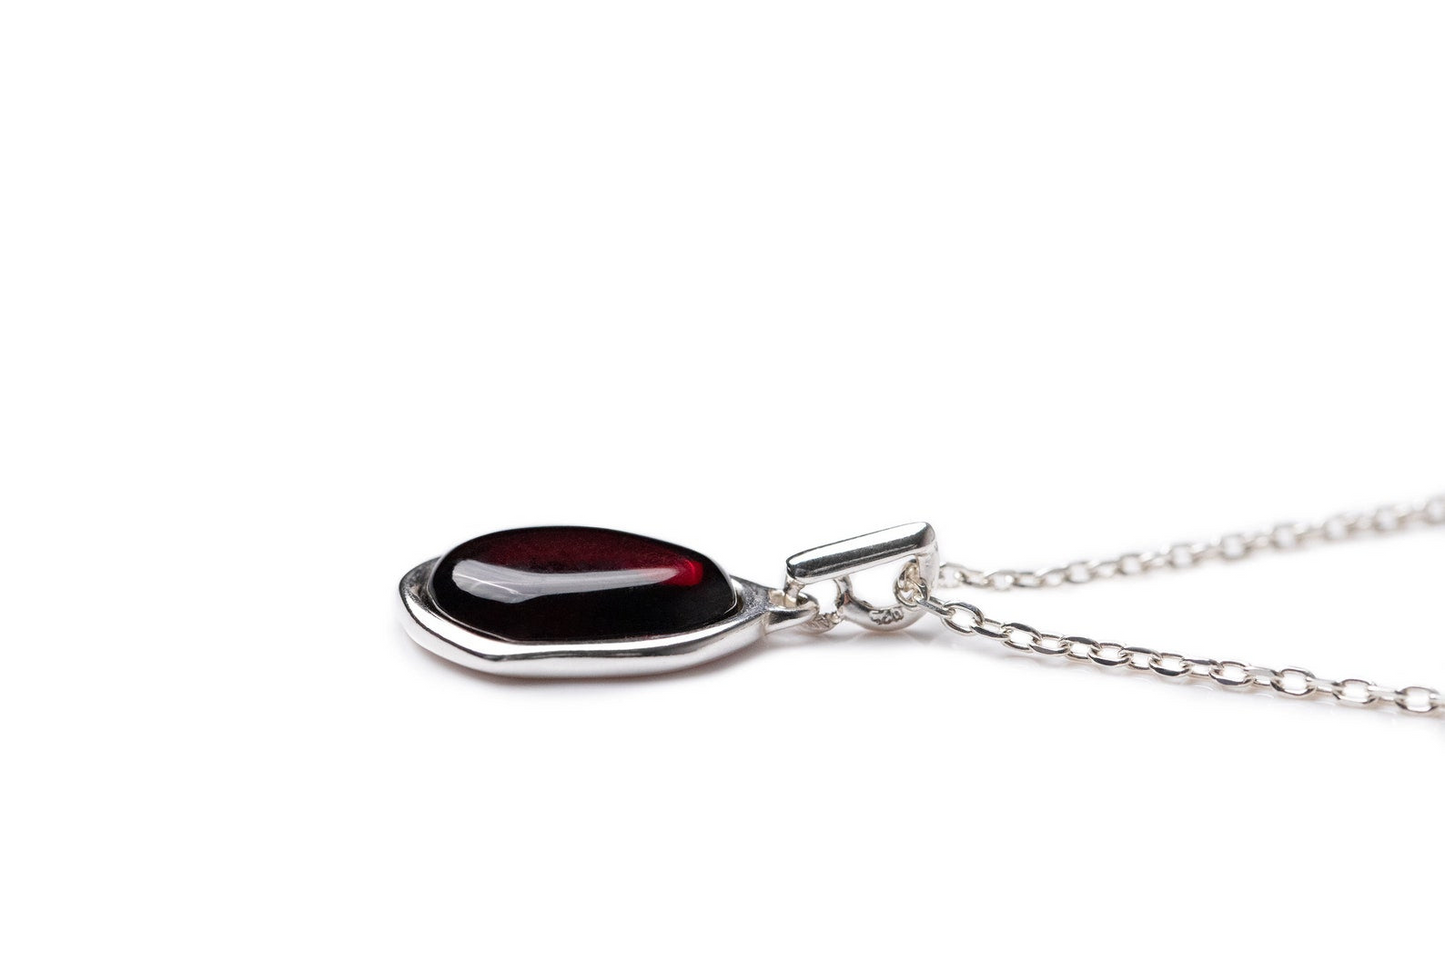 Cherry Amber ELEMENT Pendant Necklace